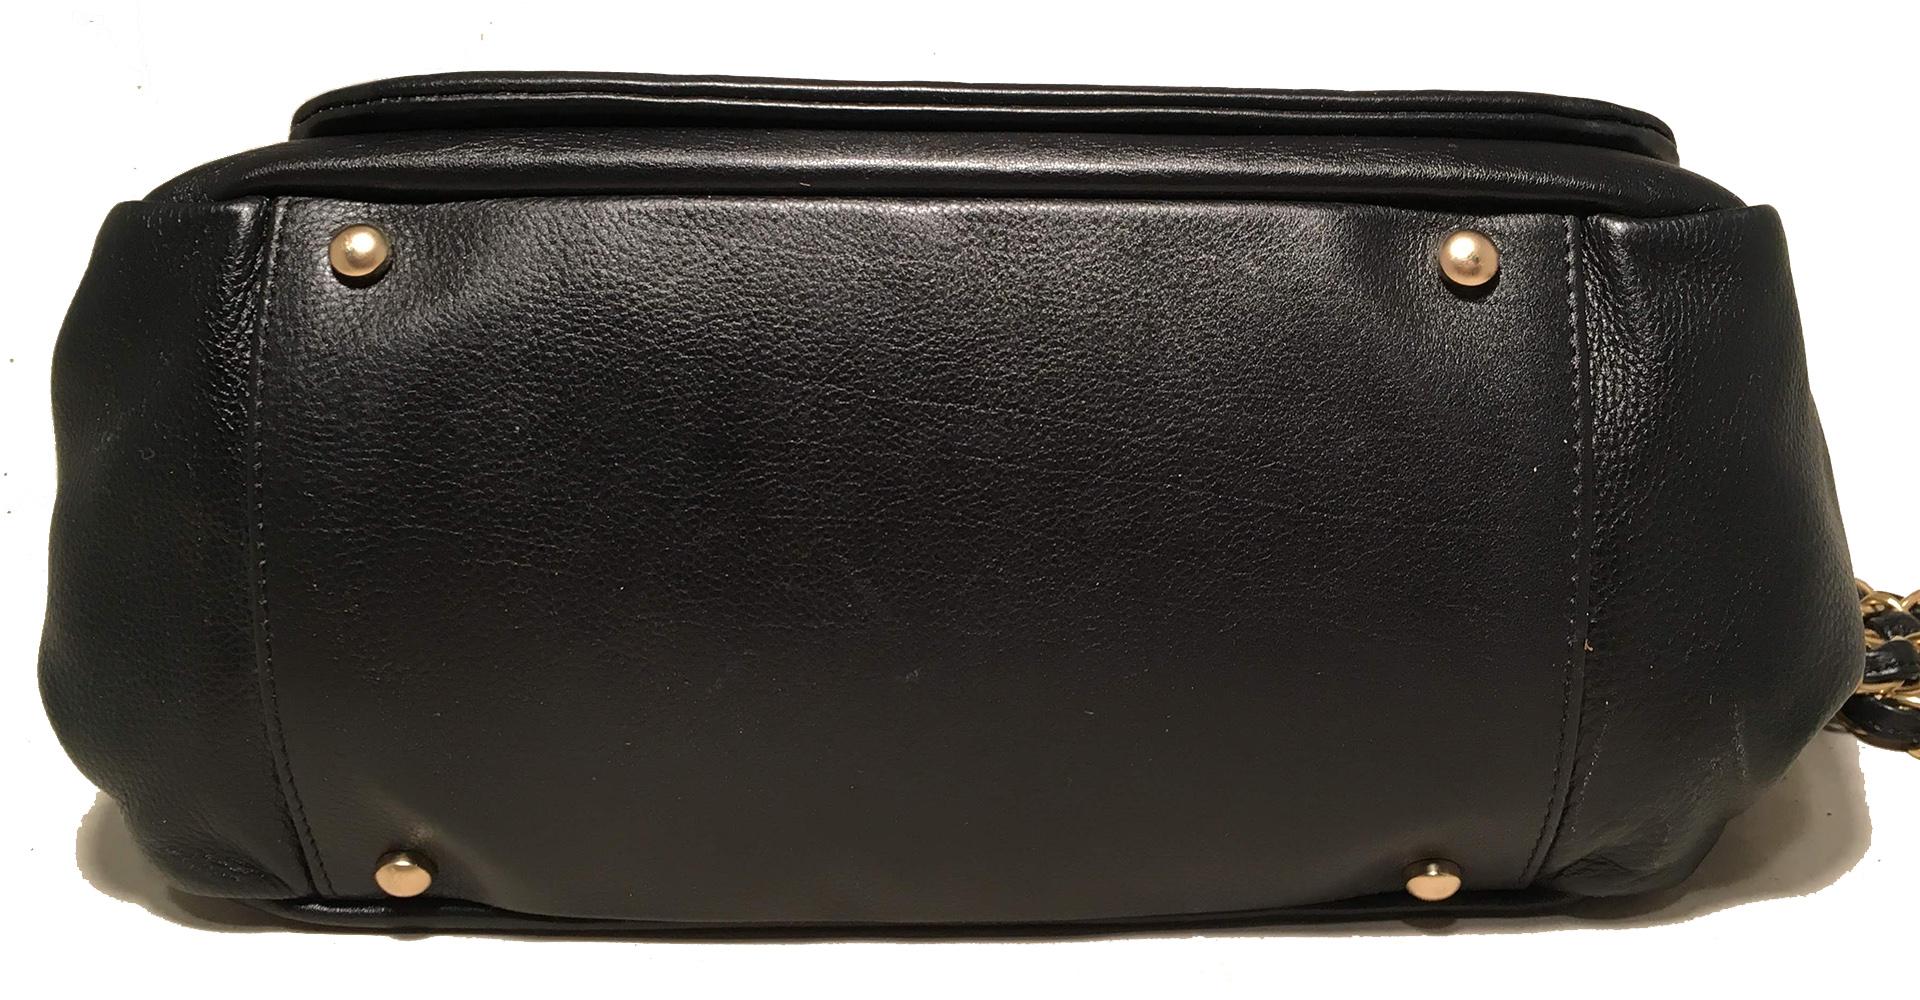 Women's Chanel Black Leather Mosaic Studded Accordion Classic Flap Shoulder Bag